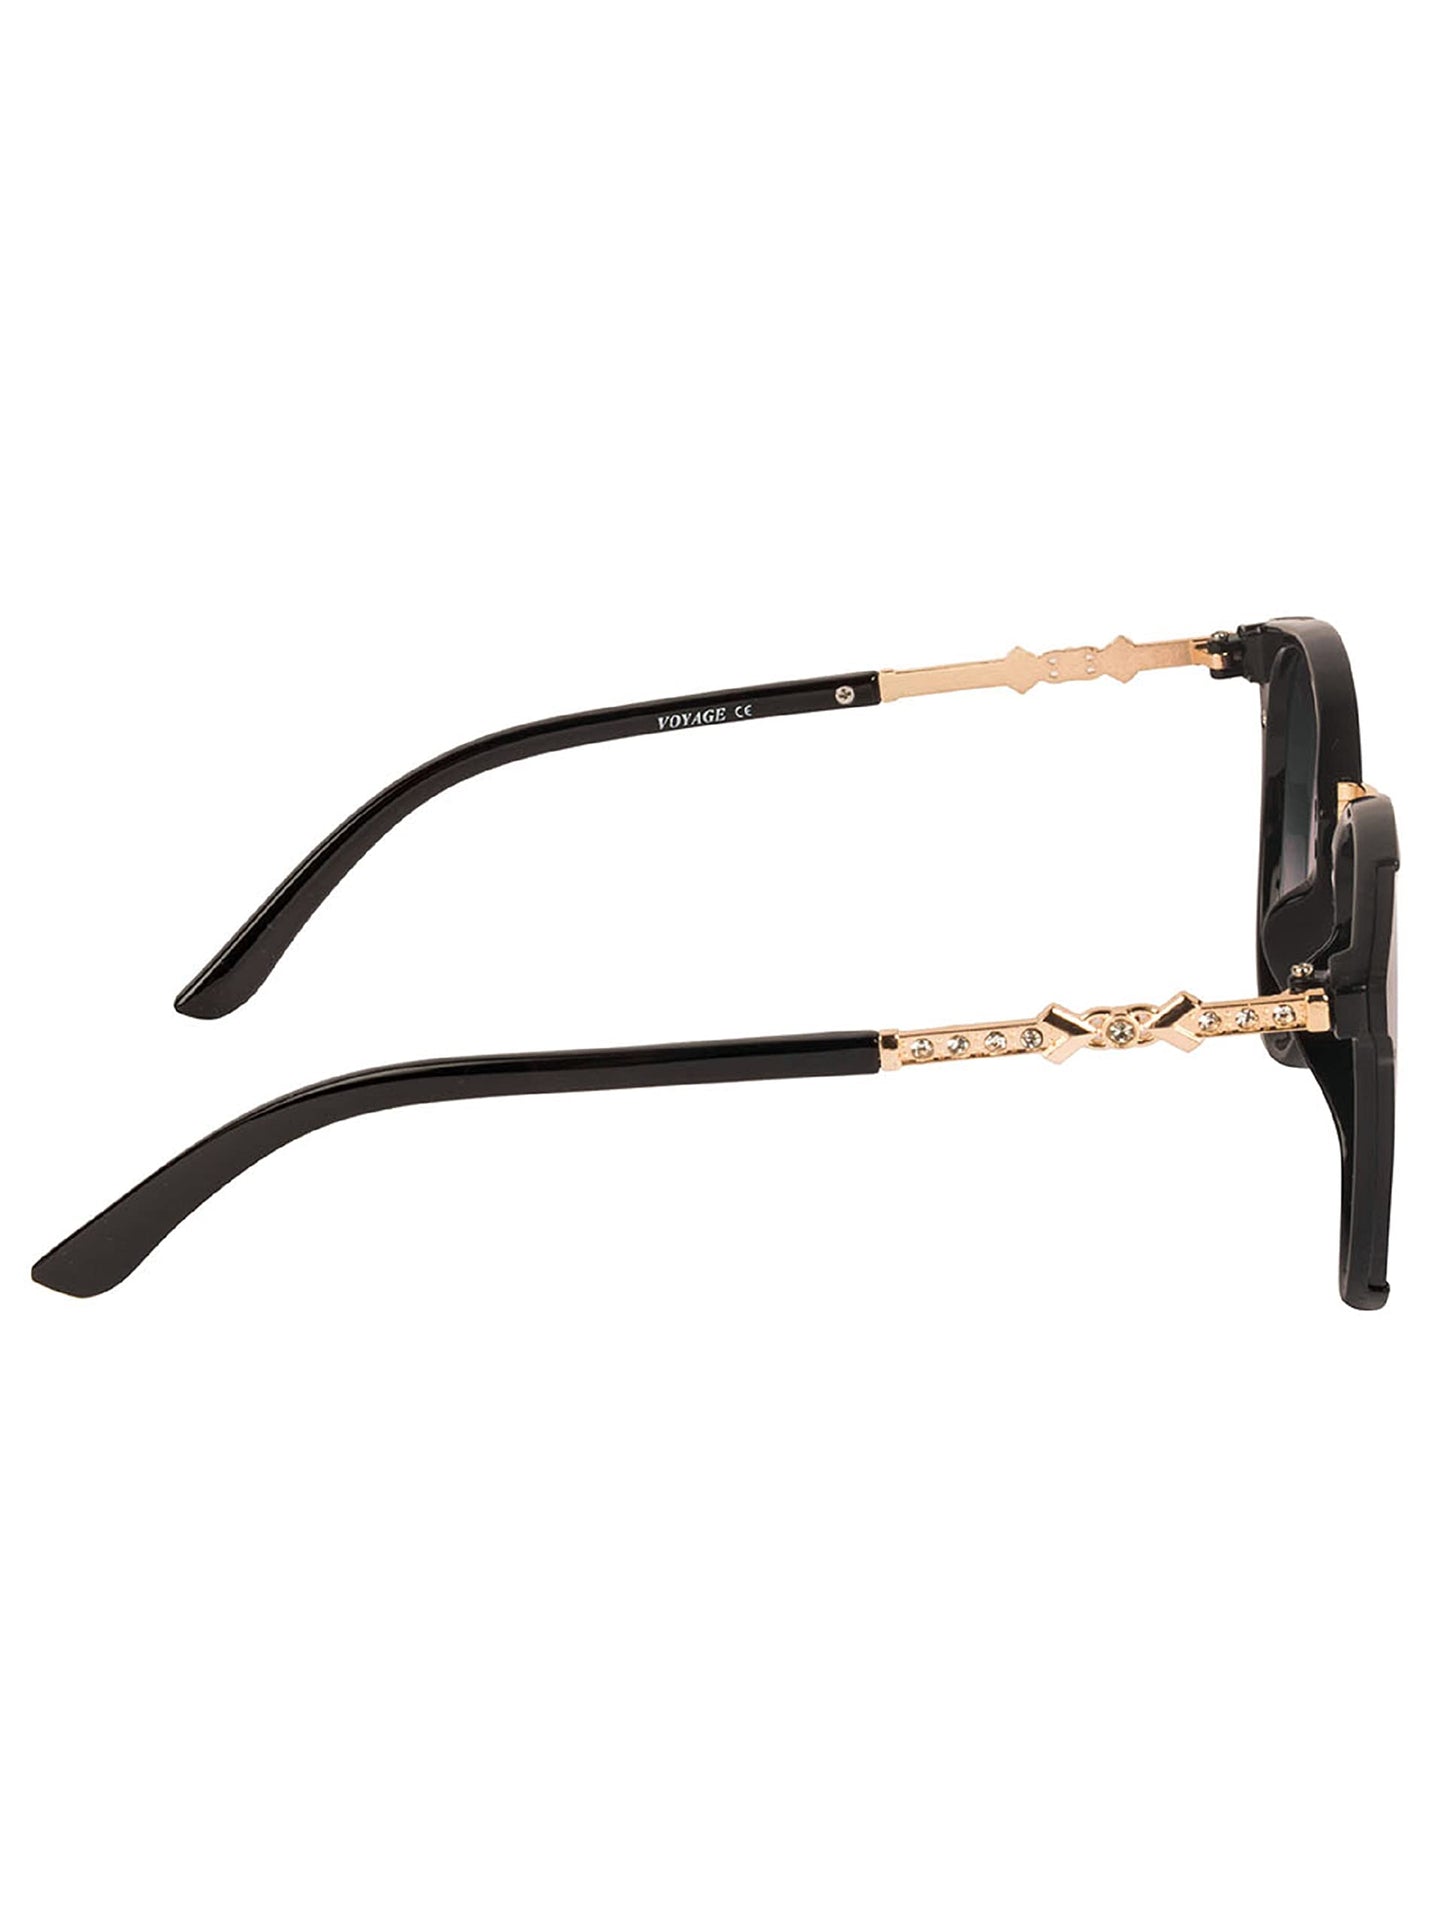 Voyage UV Protected Oval Women Sunglasses - (B8725MG3187Z | Black Lens | Black Frame)